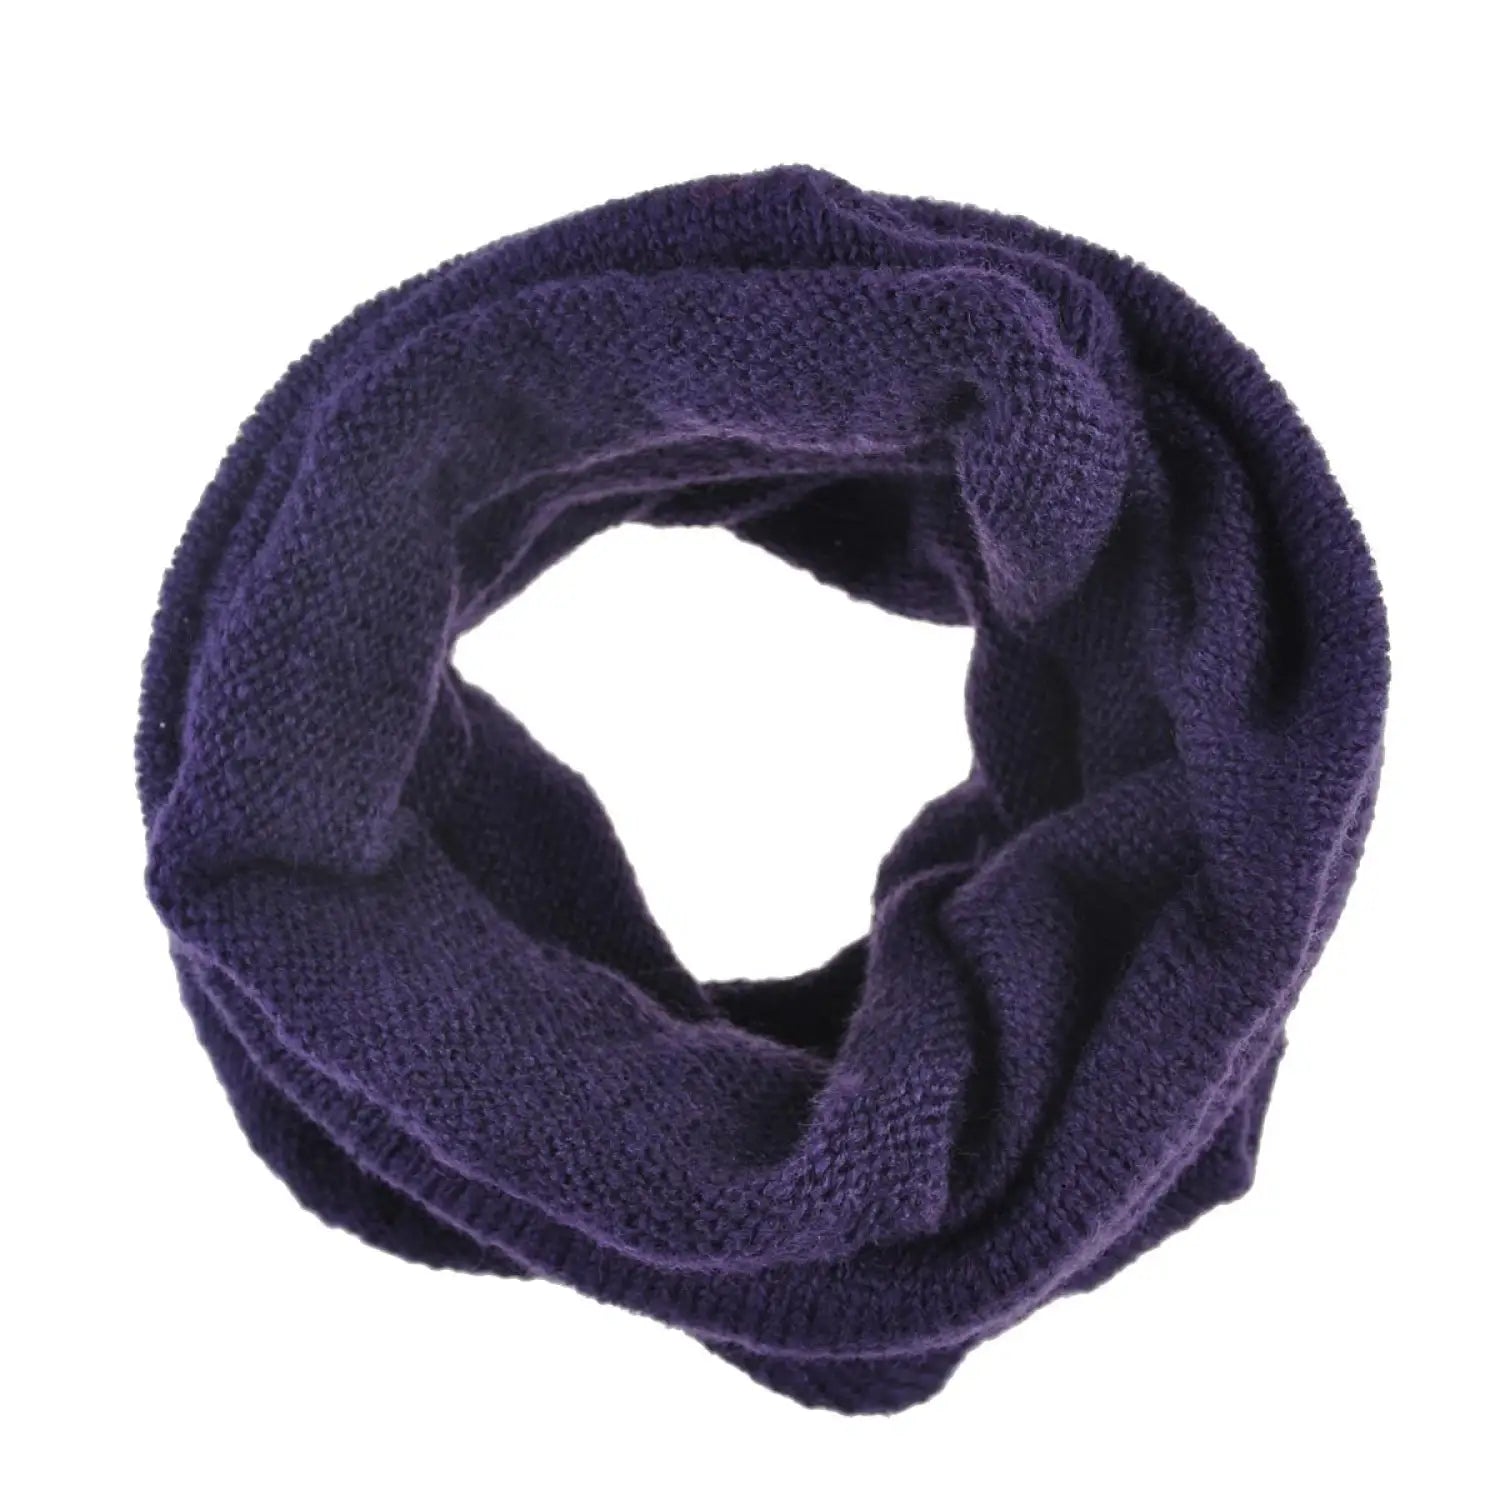 Unisex Winter Plain Purple Knitted Long Tube Scarf